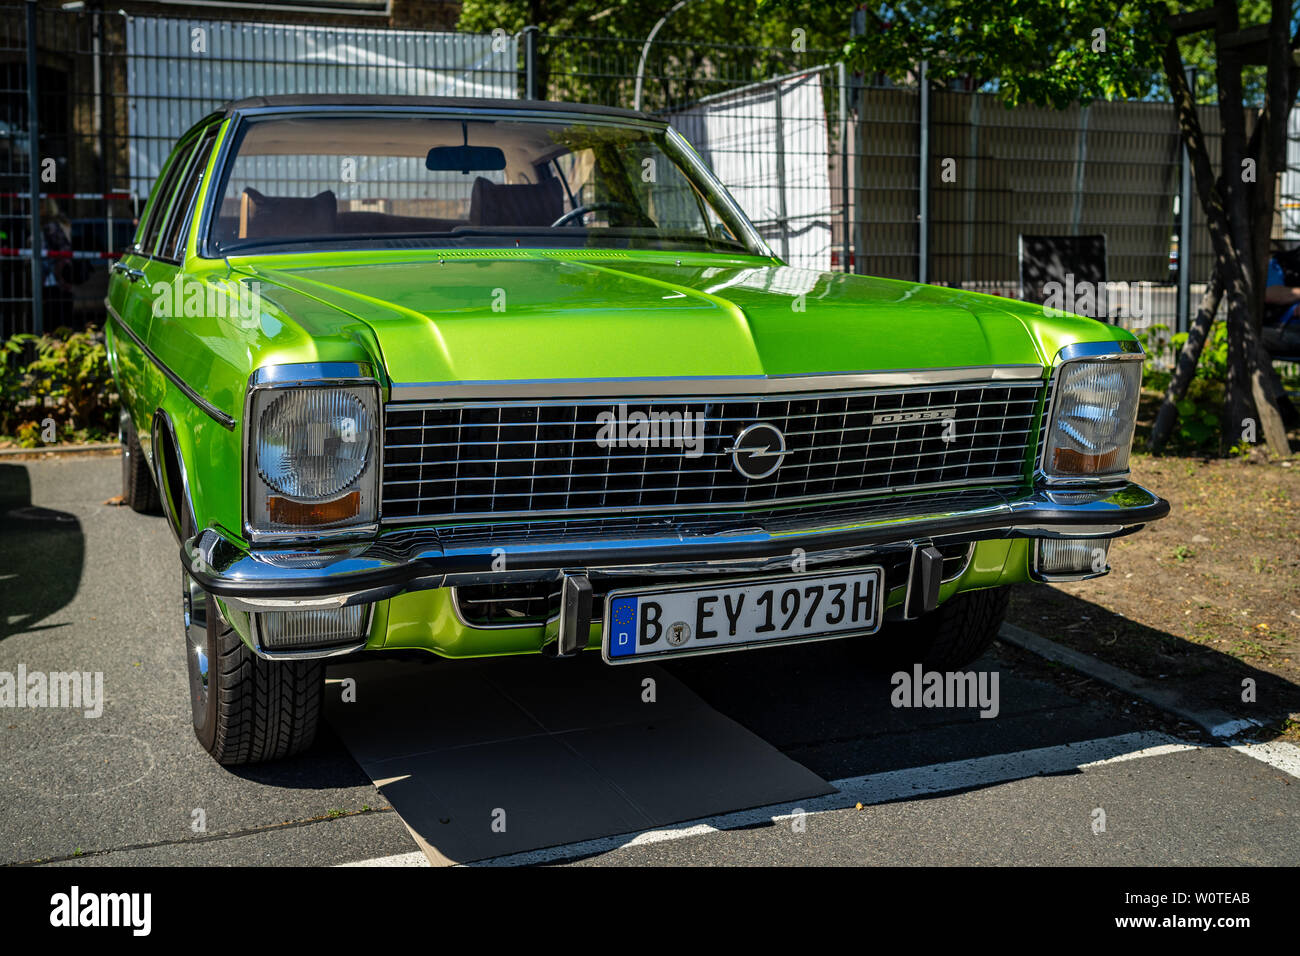 Opel diplomat -Fotos und -Bildmaterial in hoher Auflösung – Alamy